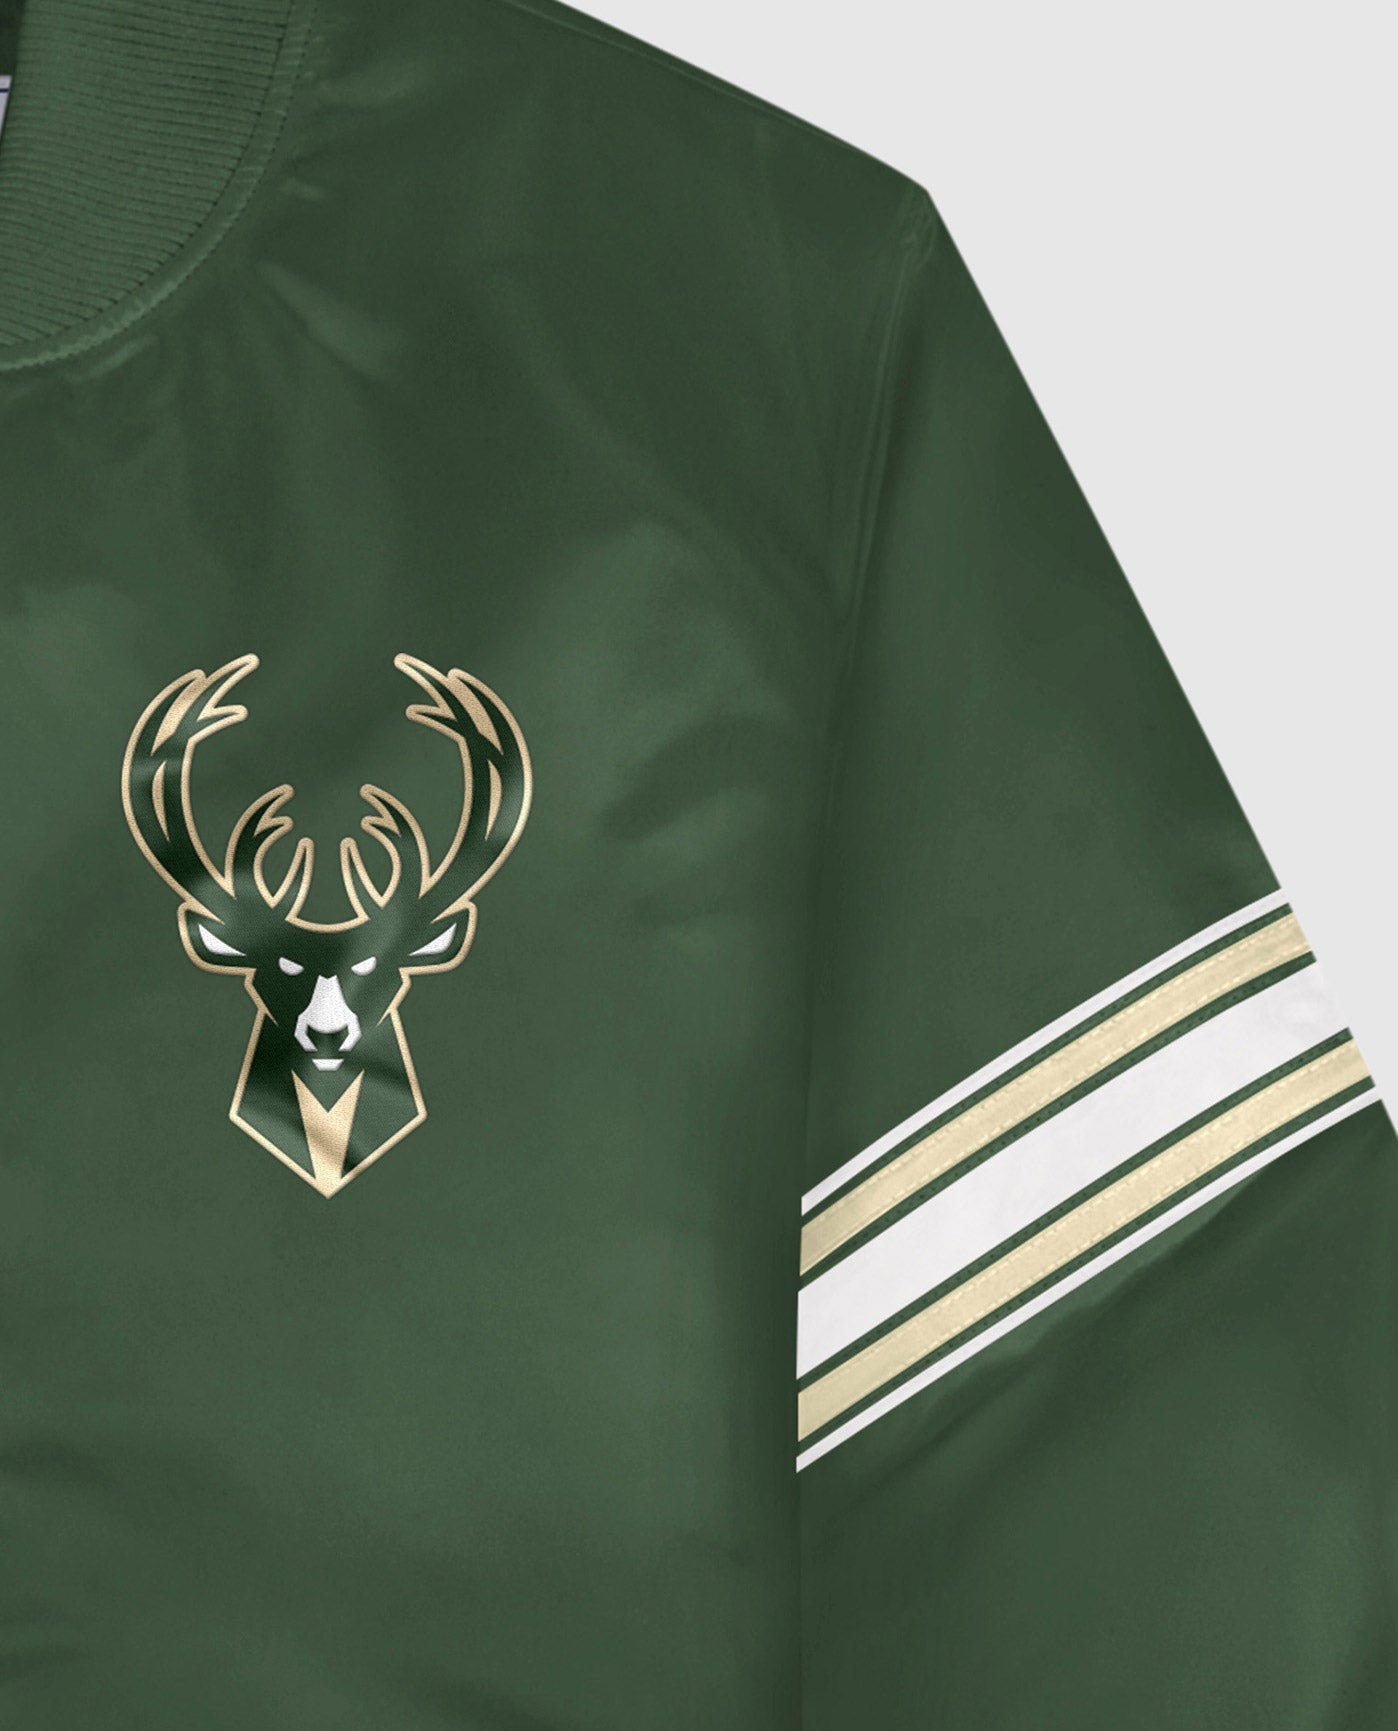 Milwaukee Bucks Twill Applique Logo And Color Stripe Sleeve | Bucks Green